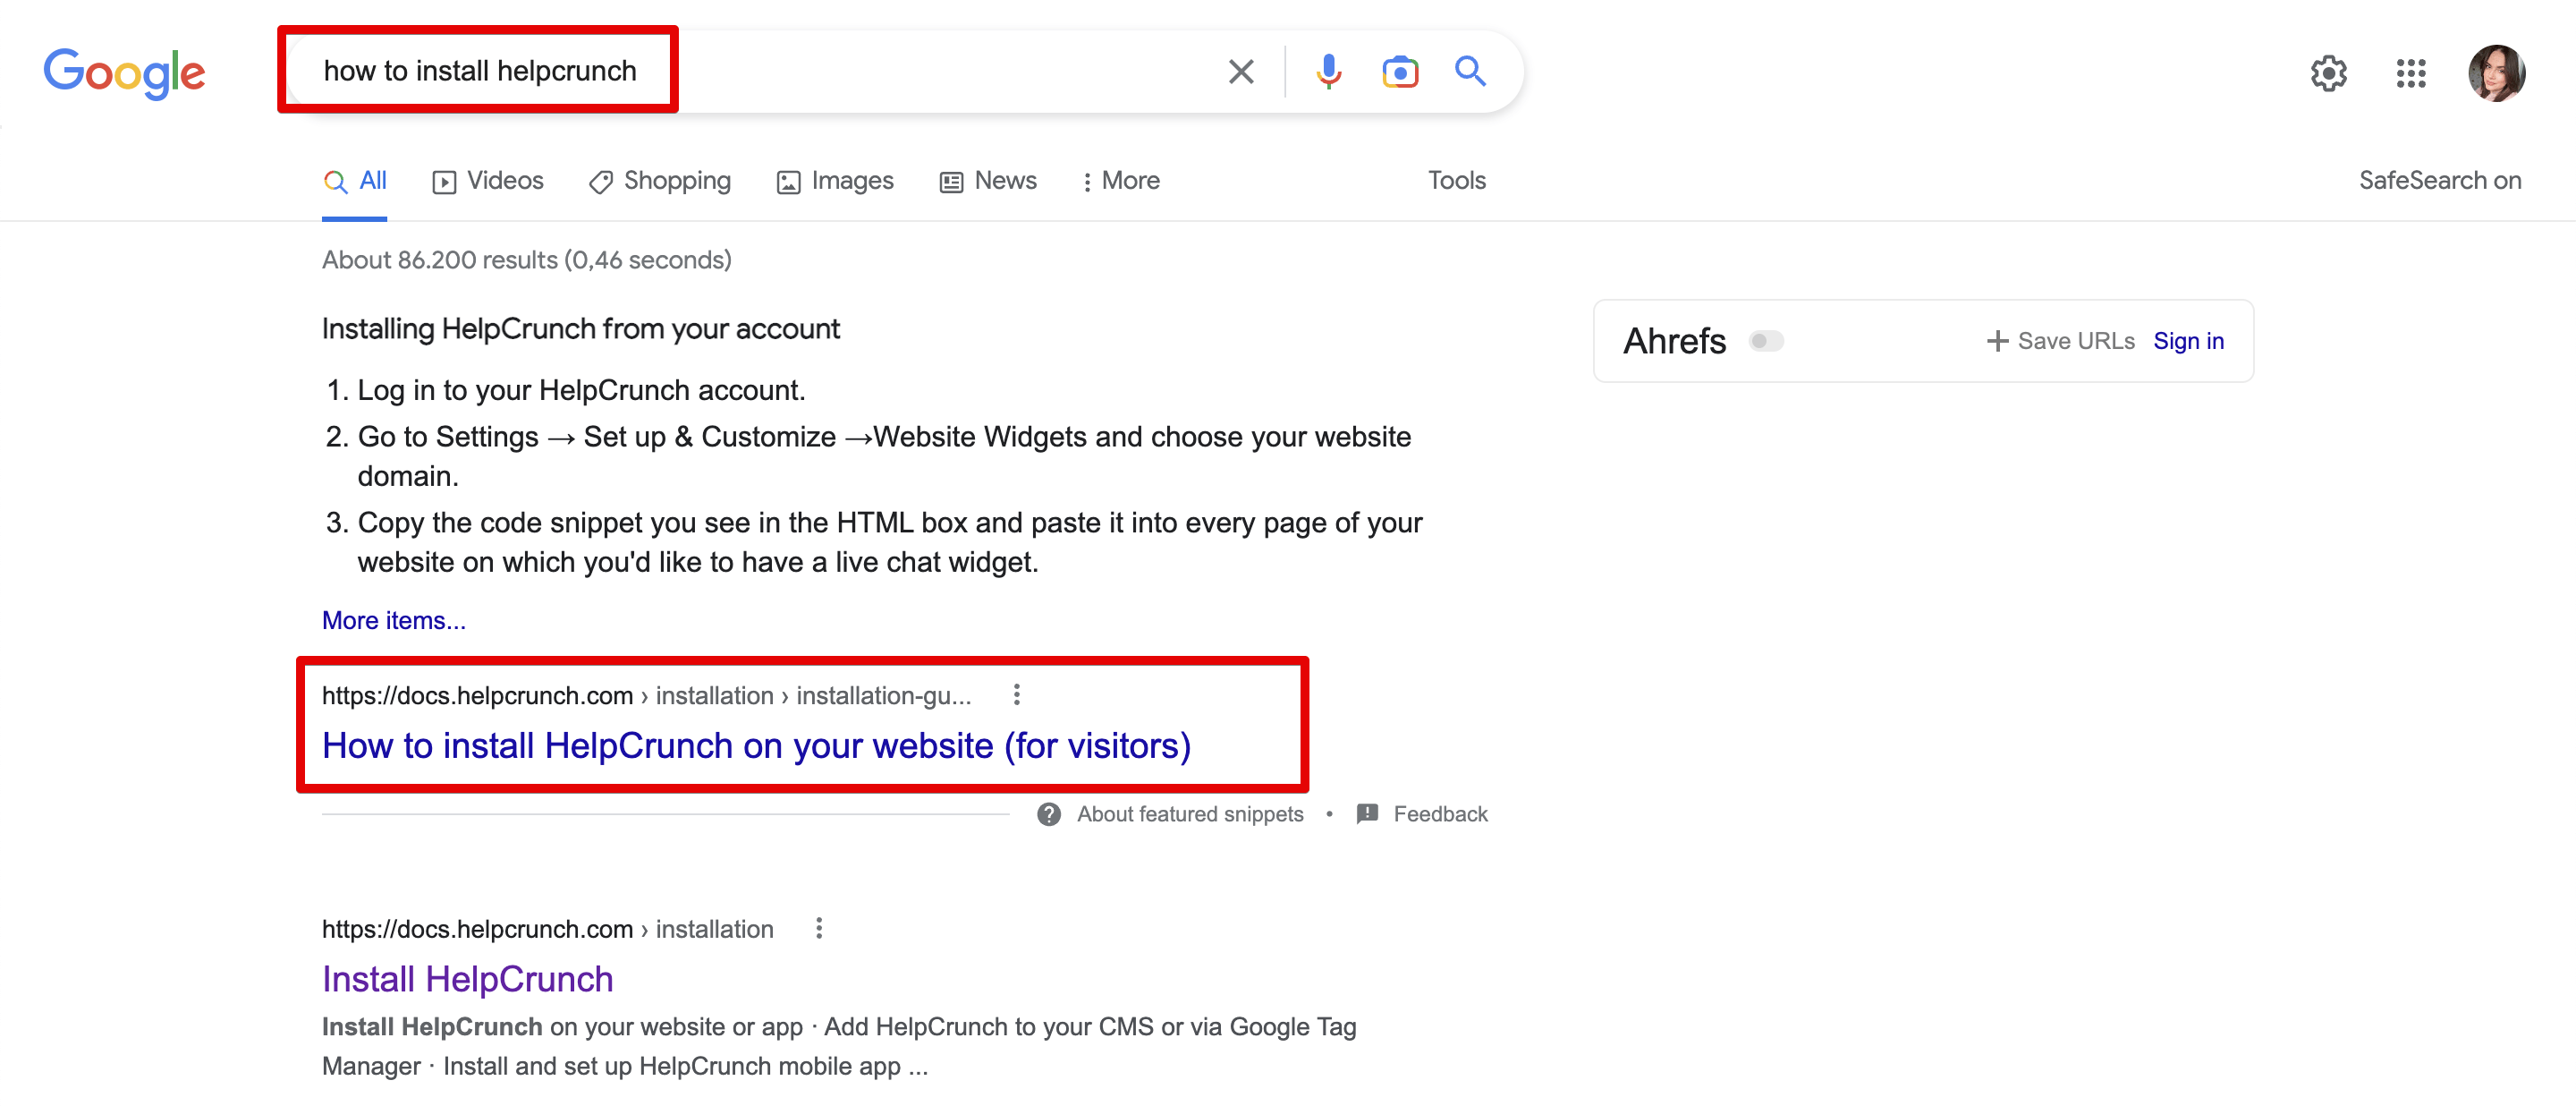 the HelpCrunch knowledge base in Google